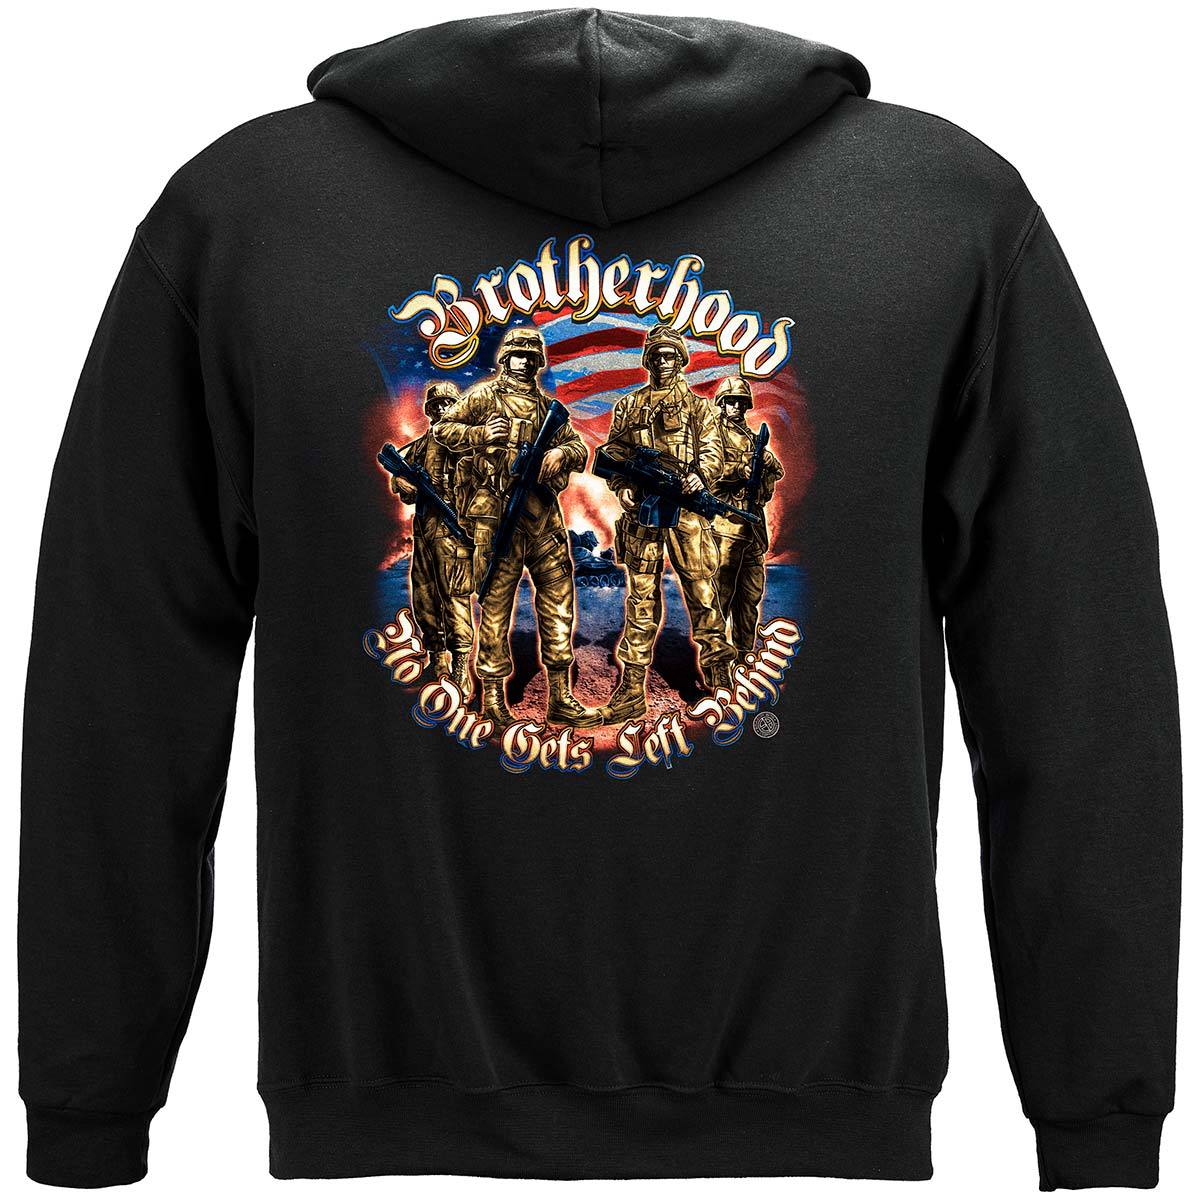 Brotherhood Soldier Premium Hooded Sweat Shirt